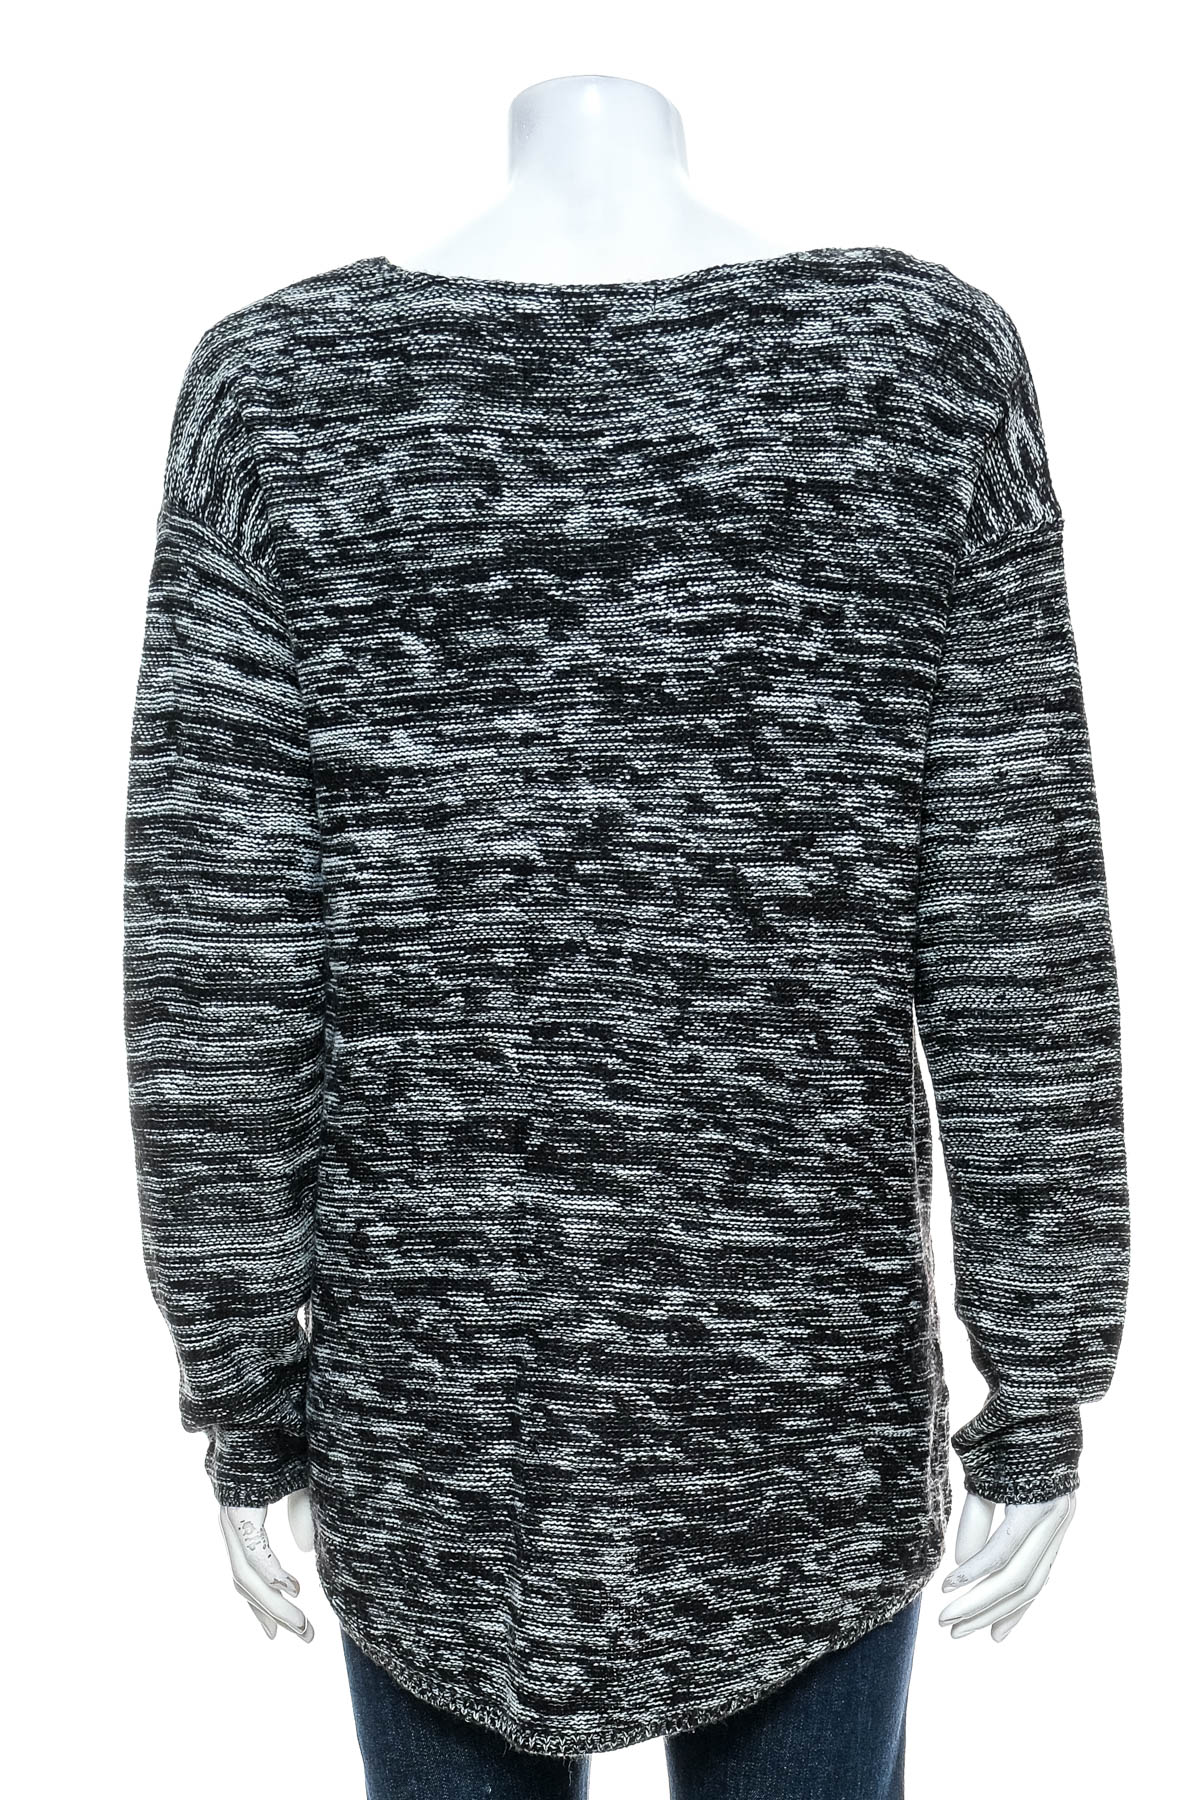 Women's sweater - ARIZONA JEAN CO - 1